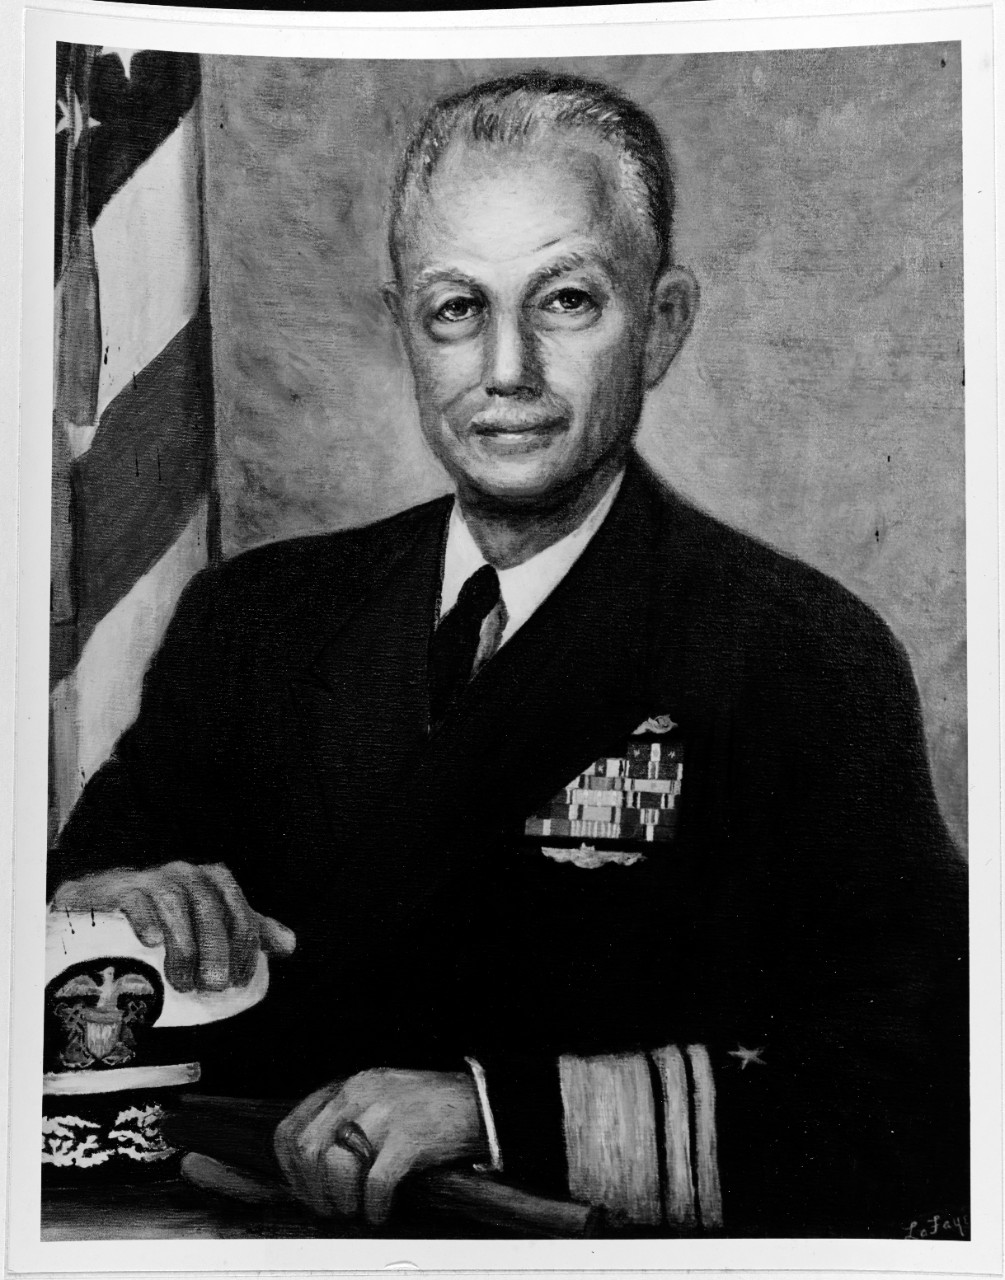 Glynn R. Donaho, Vice Admiral, USN